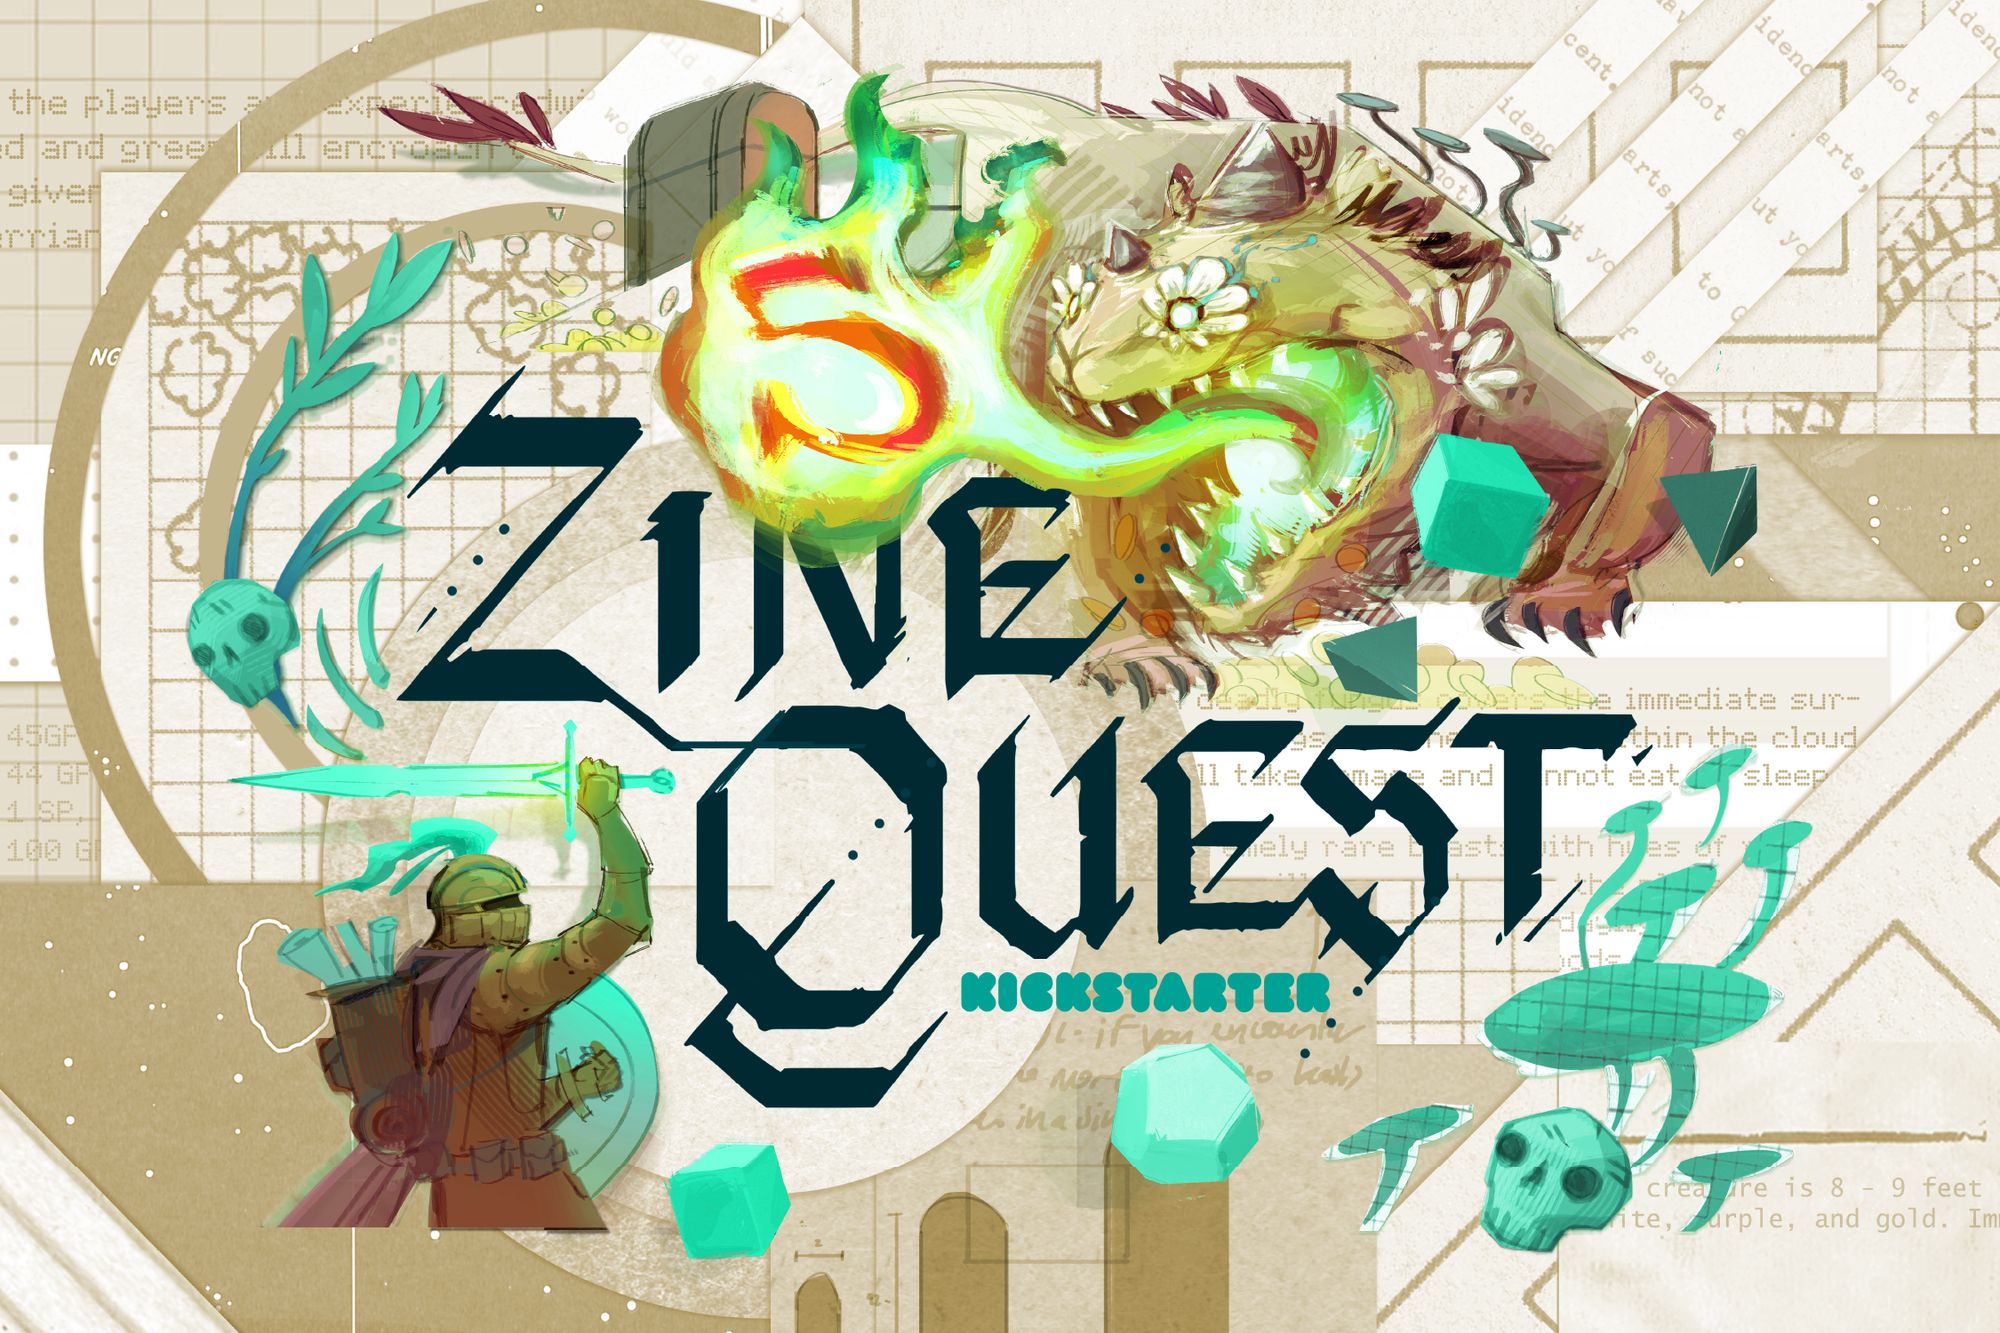 Zine Quest 2023: Kickstarter’s Annual Open Call for RPG Zines Returns in February